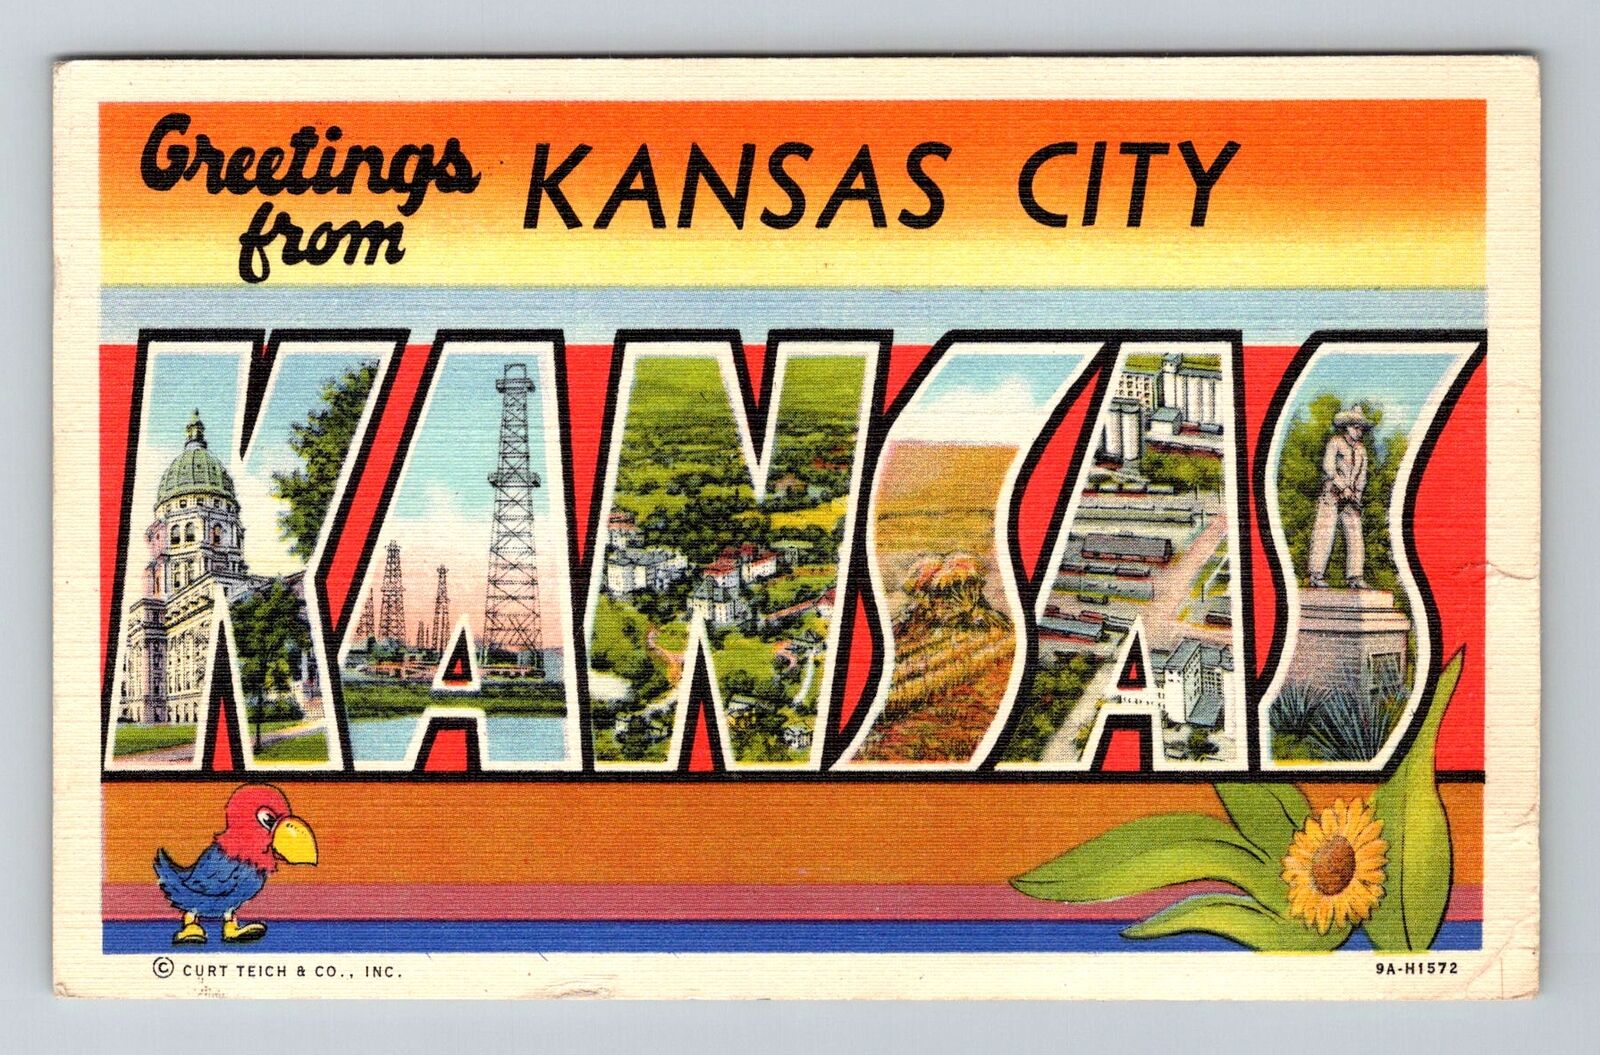 KS-Kansas, General LARGE LETTER Greetings, Vintage c1950 Postcard